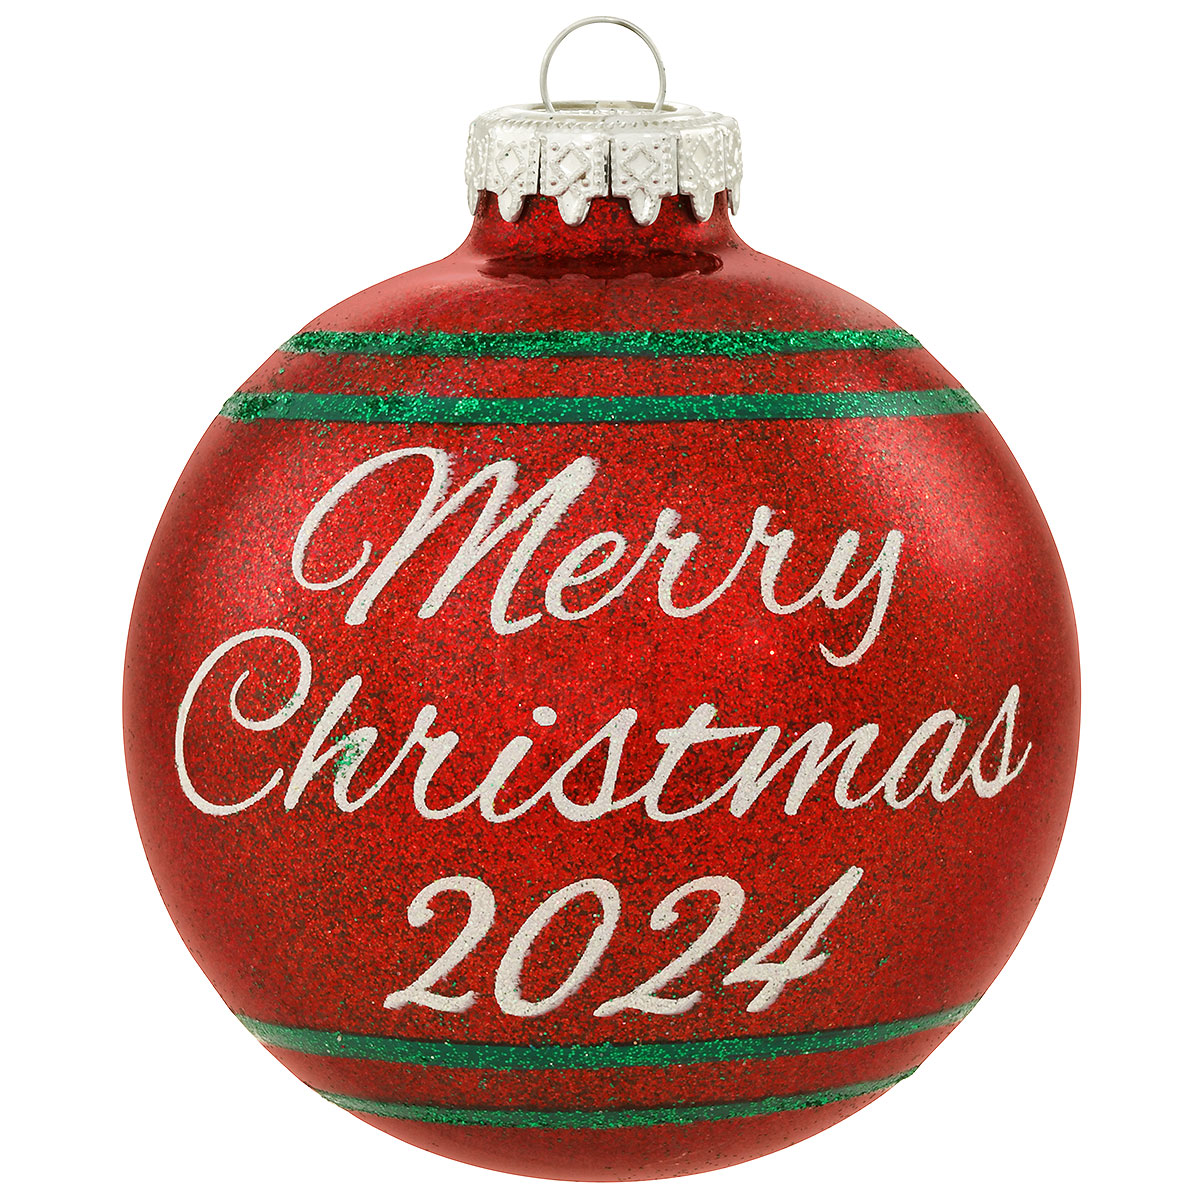 Merry Christmas 2024 Ornament